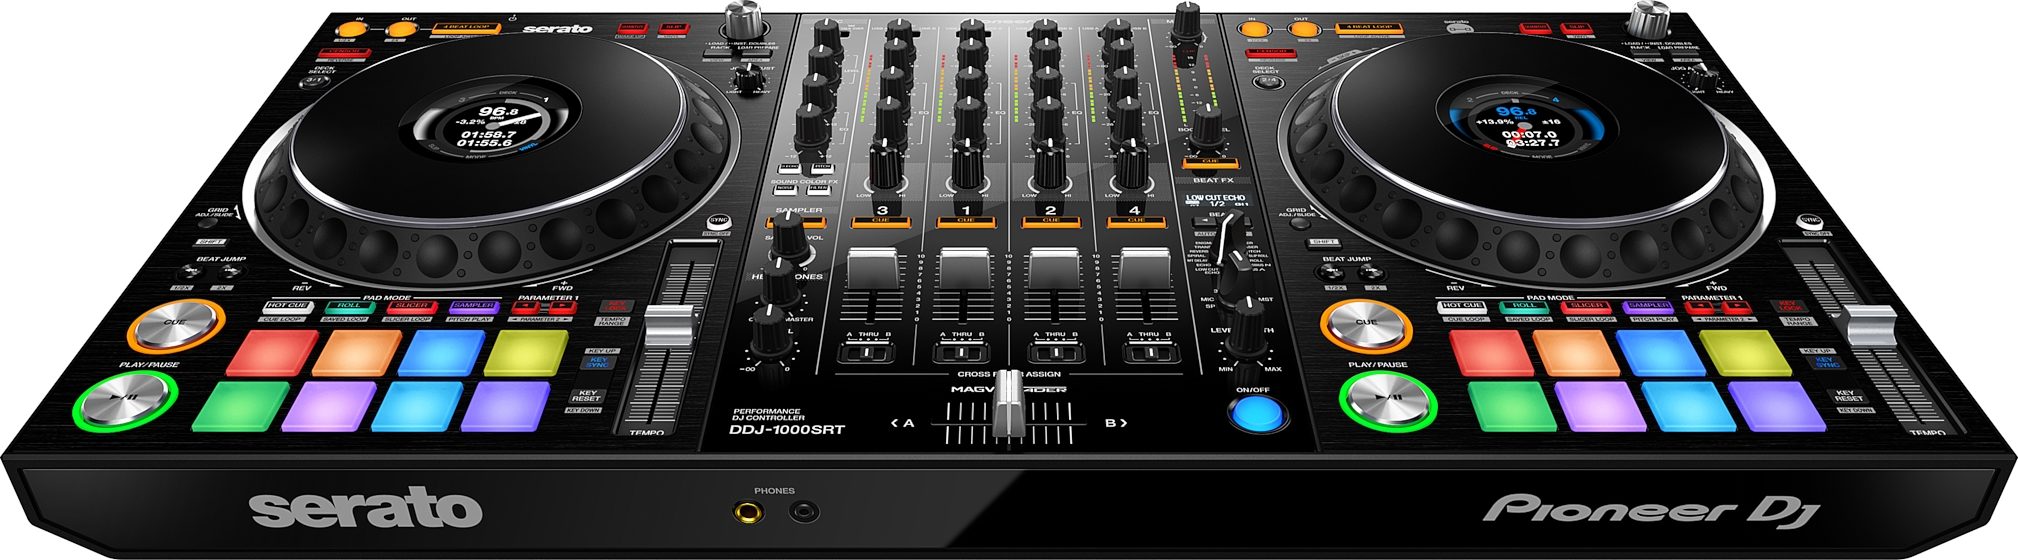 Pioneer DDJ-1000 SRT DJ Controller for Serato | zZounds